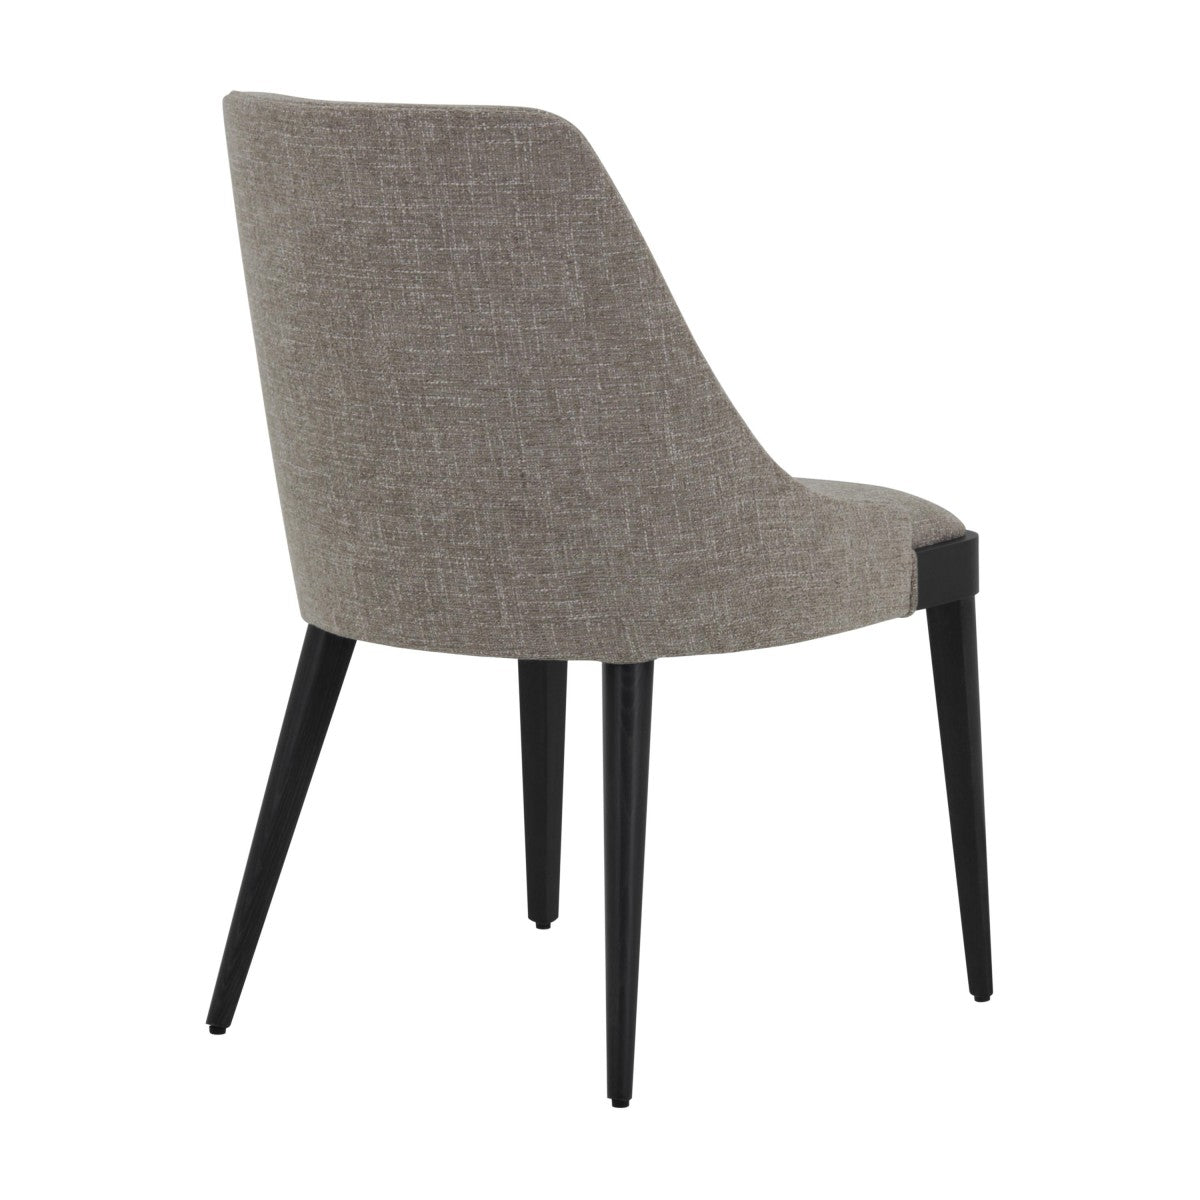 Danimarka Bespoke Upholstered Modern Contemporary Dining Chair MS228S Custom Made To Order